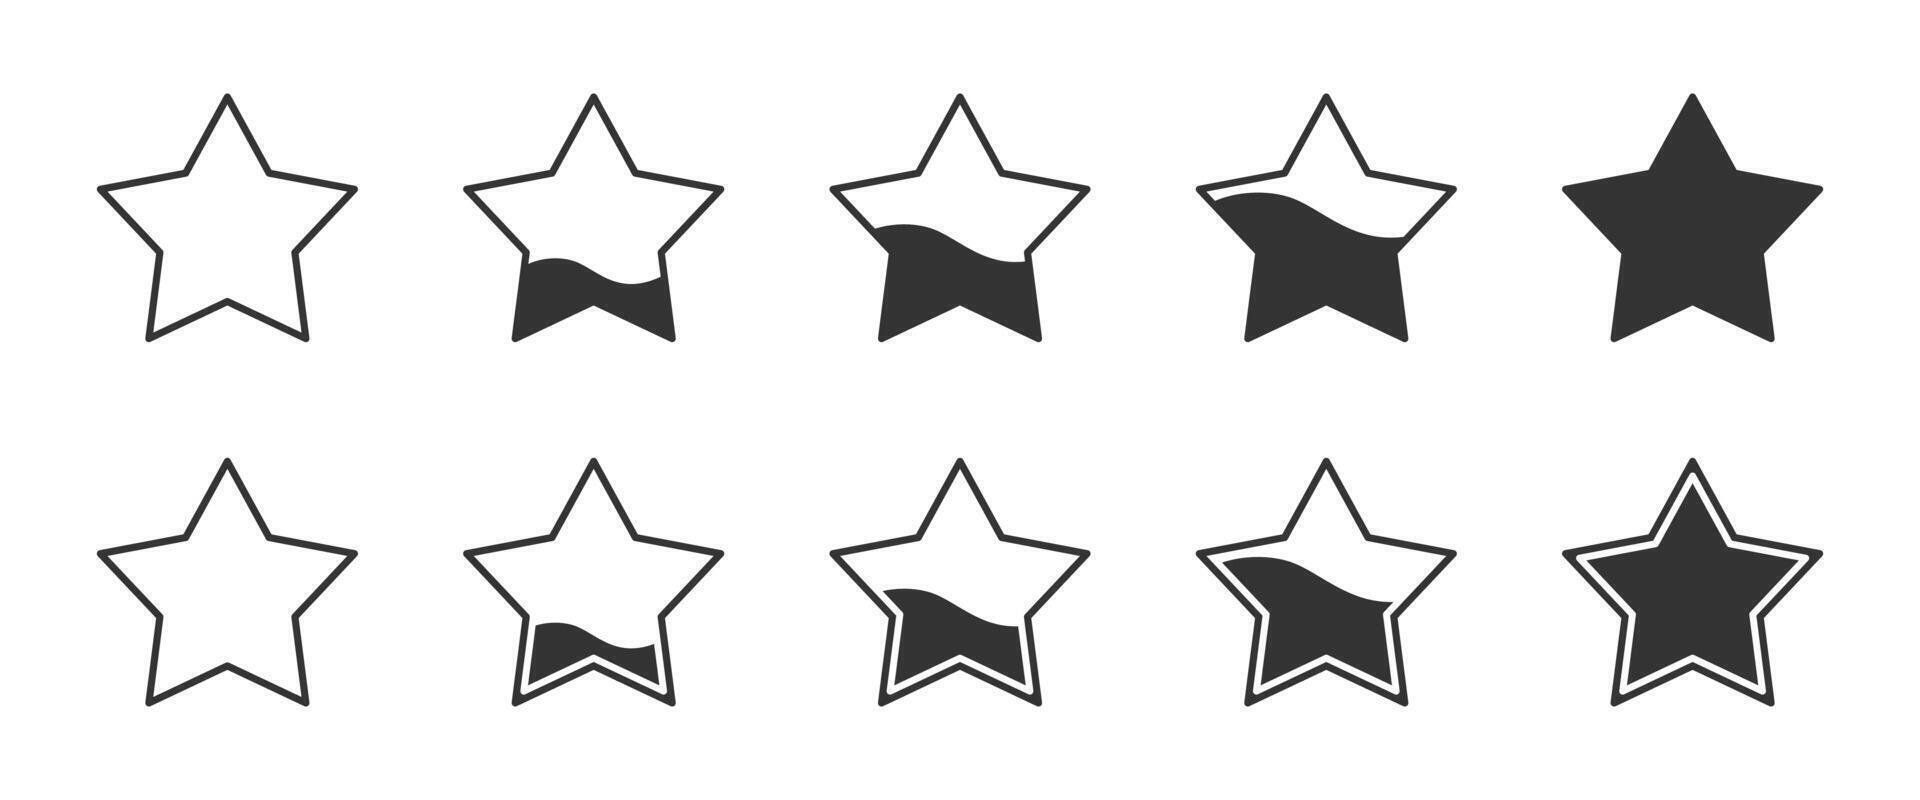 Star Symbole Satz. Vektor Illustration.